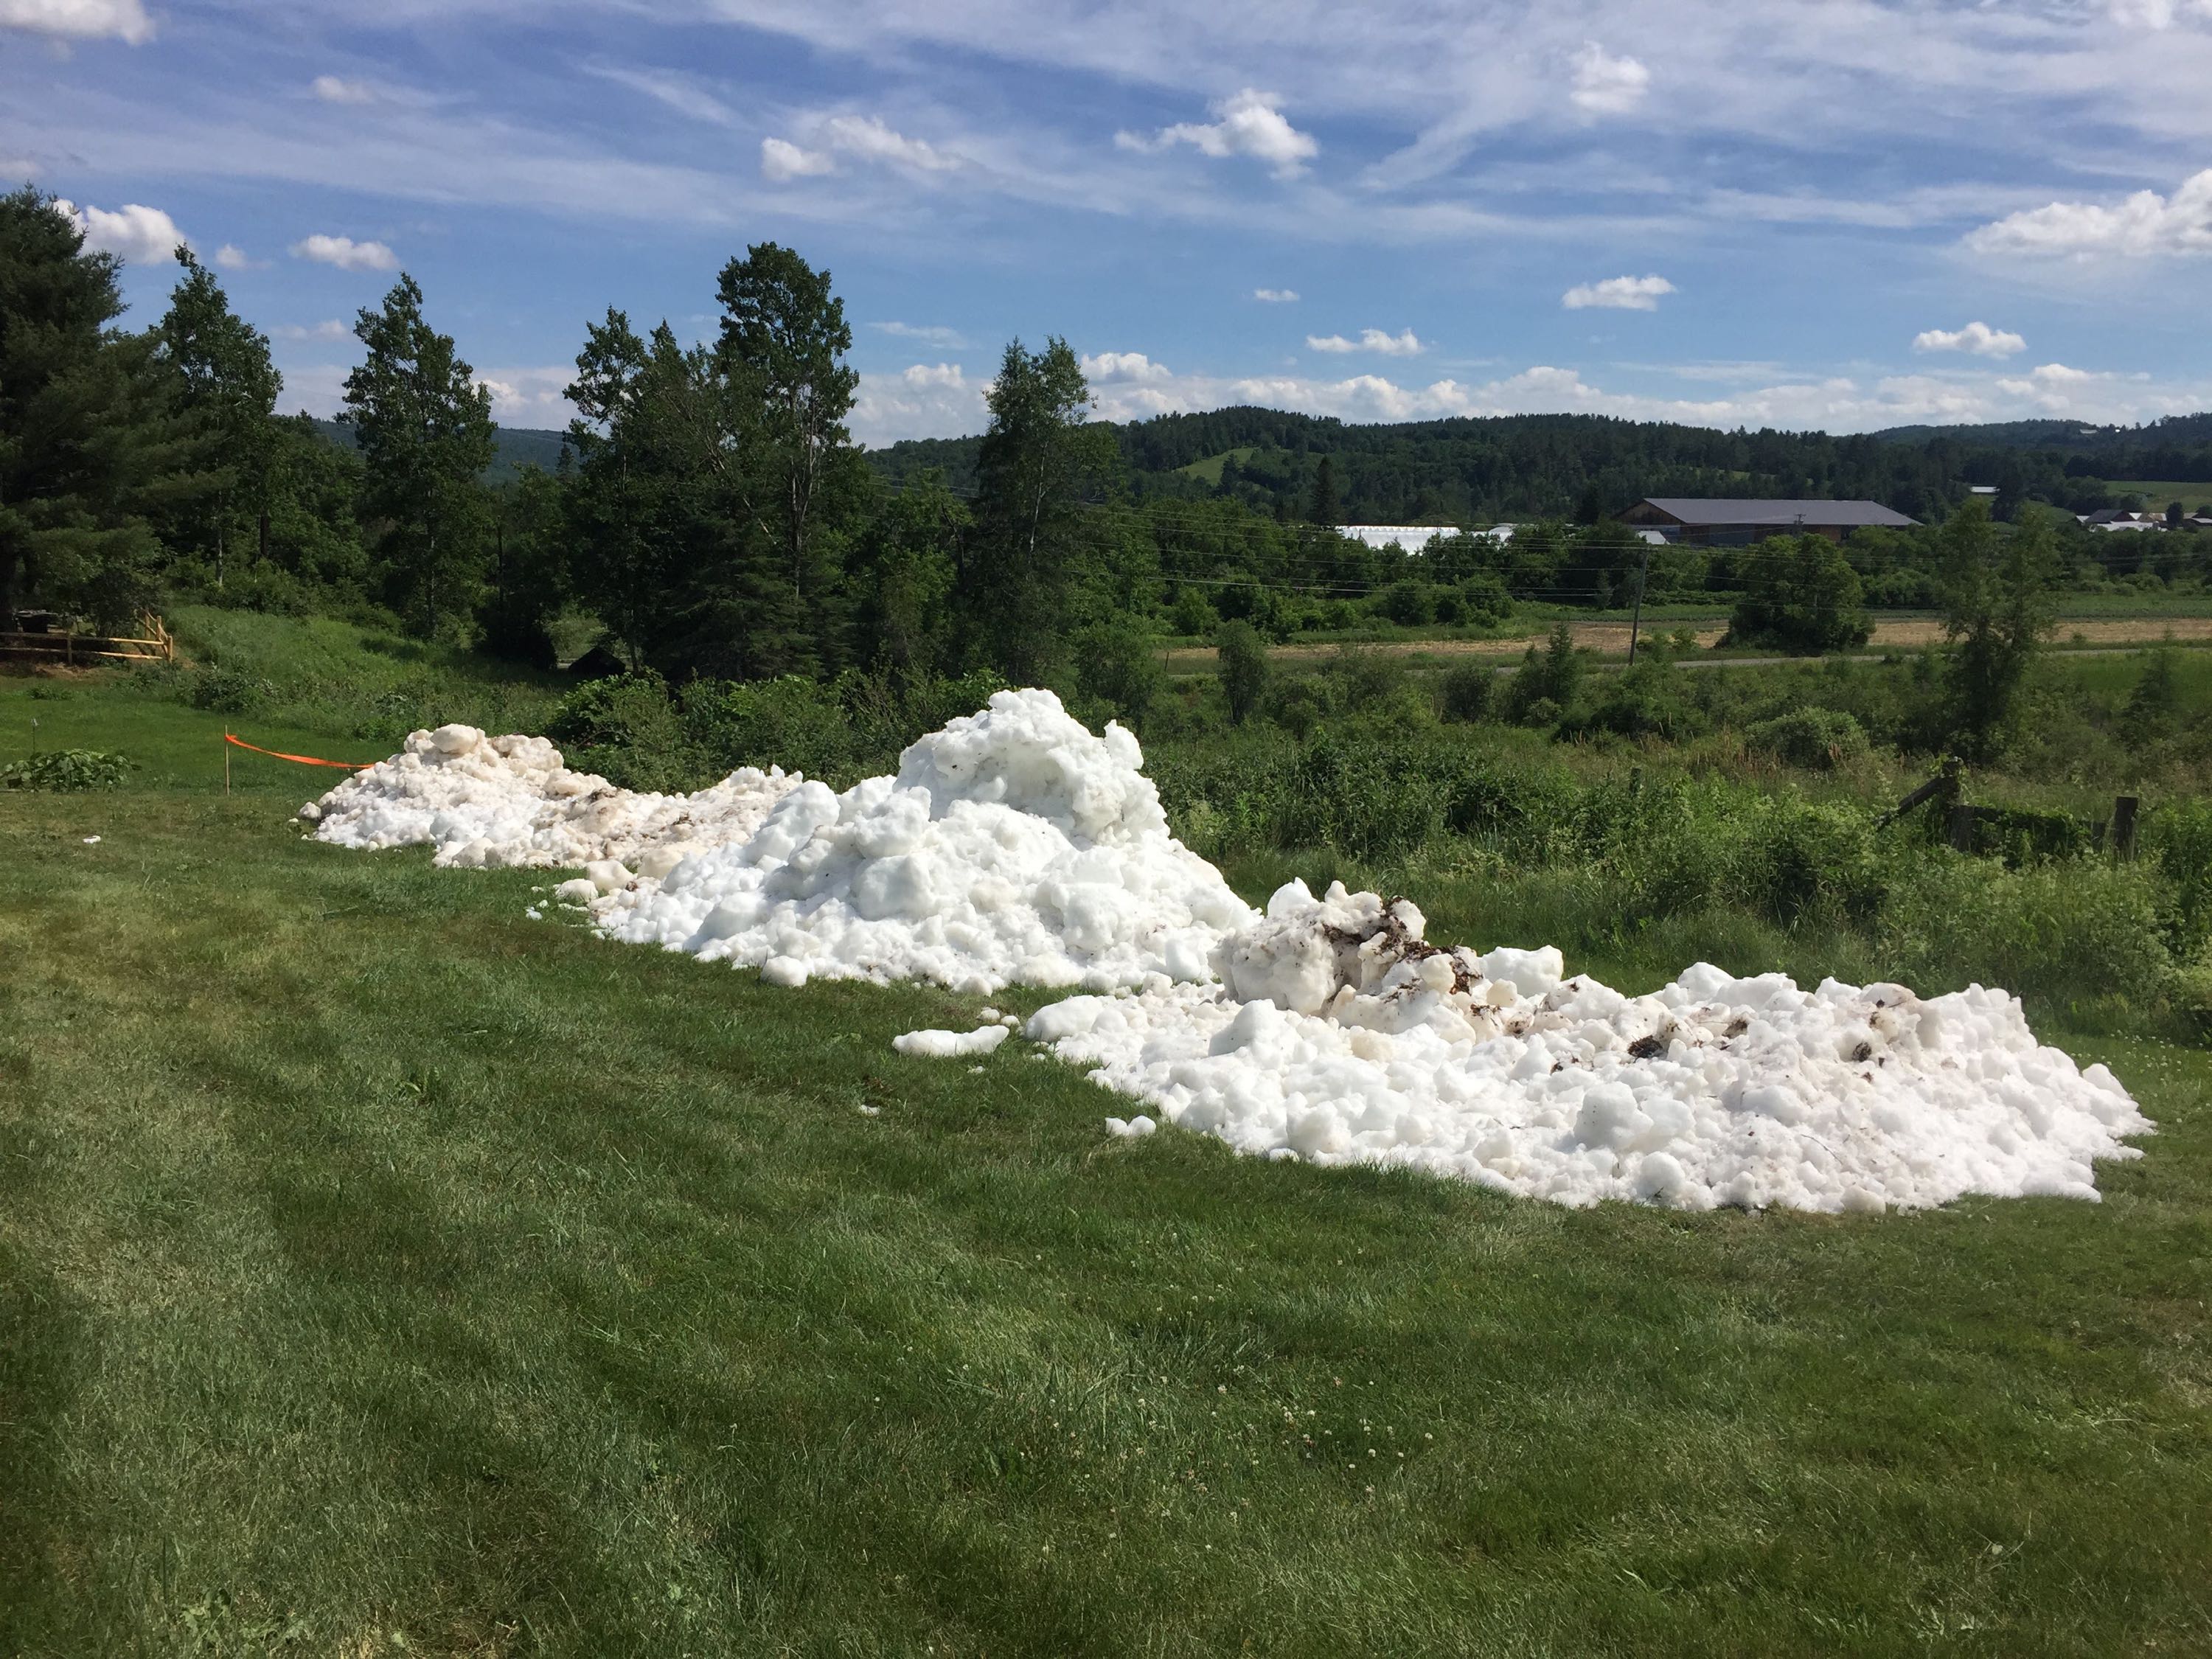 dumped snow  (Judy Geer photo)